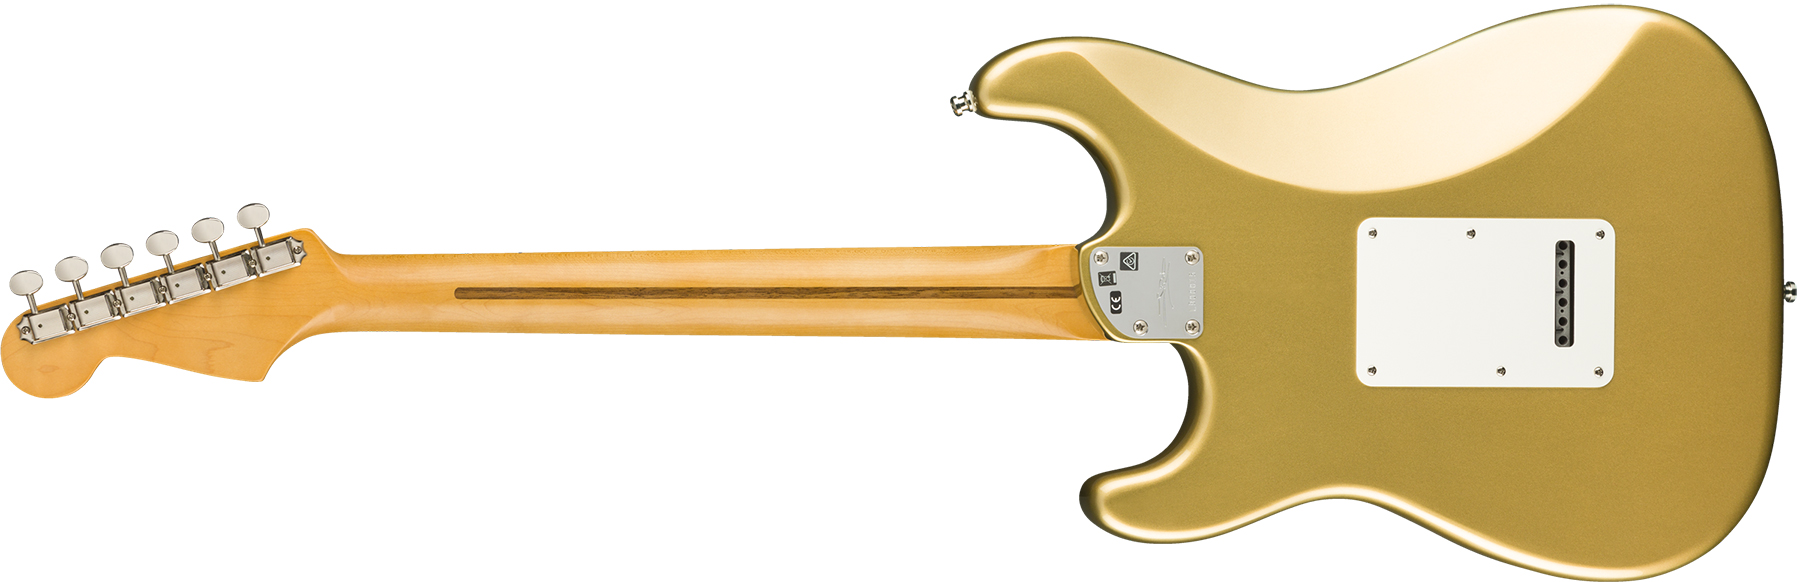 Fender Strat Lincoln Brewster Usa Signature Mn - Aztec Gold - Guitare Électrique Forme Str - Variation 1